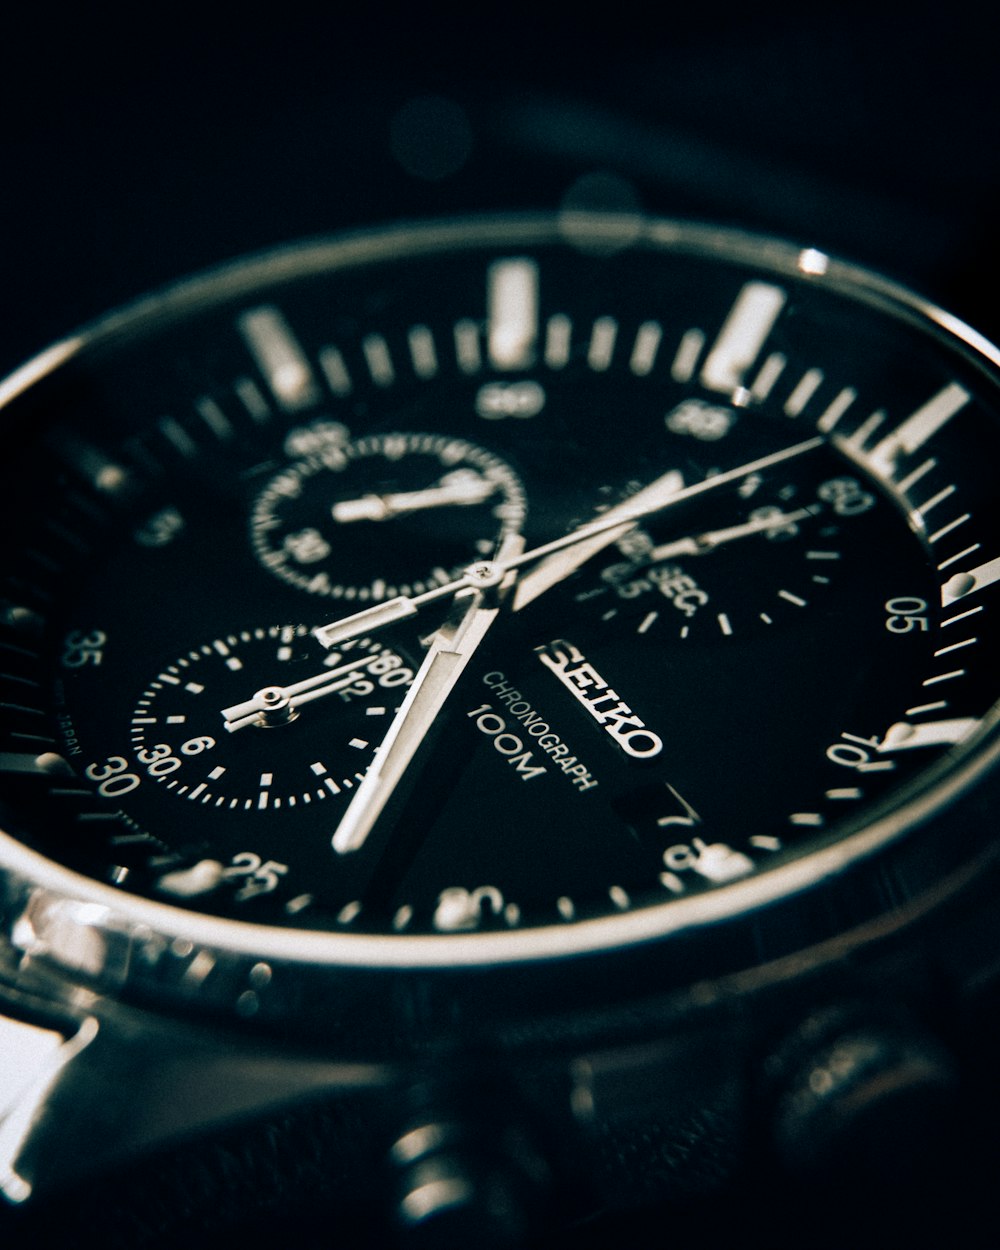 round silver-colored Seiko chronograph watch